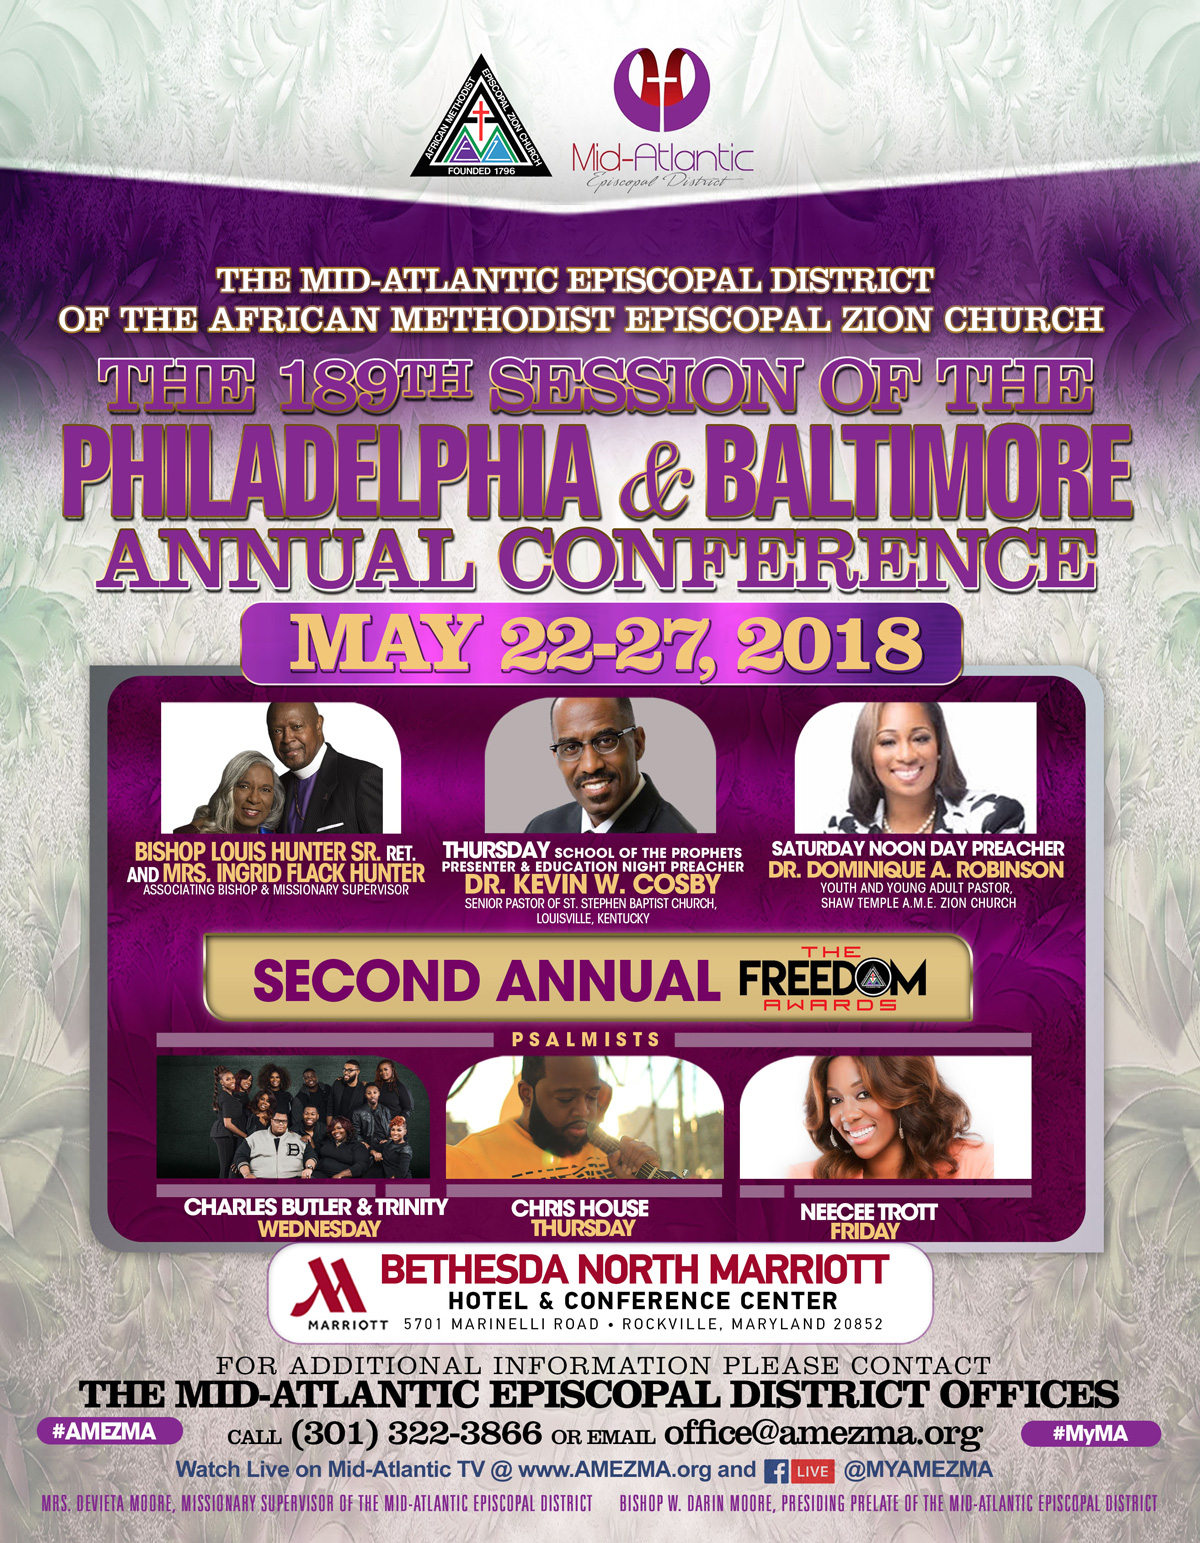 PhiladelphiaBaltimore Conference MidAtlantic Episcopal District of